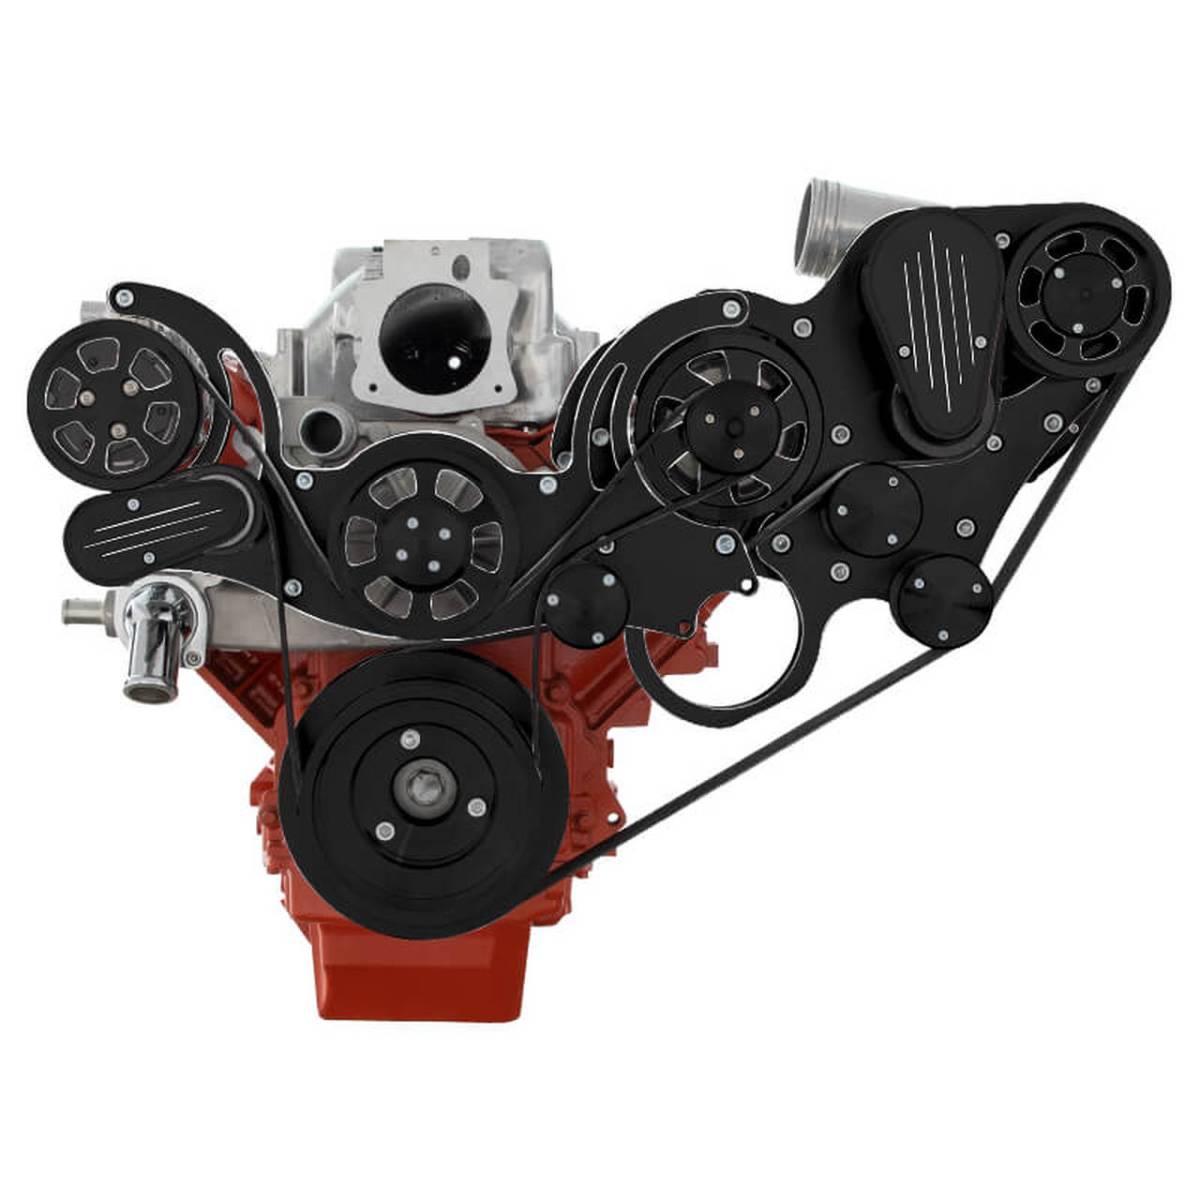 CVF Racing - CVF Wraptor Chevy LS Engine Procharger Serpentine Bracket System with Alternator - Black Diamond Finish - Image 1